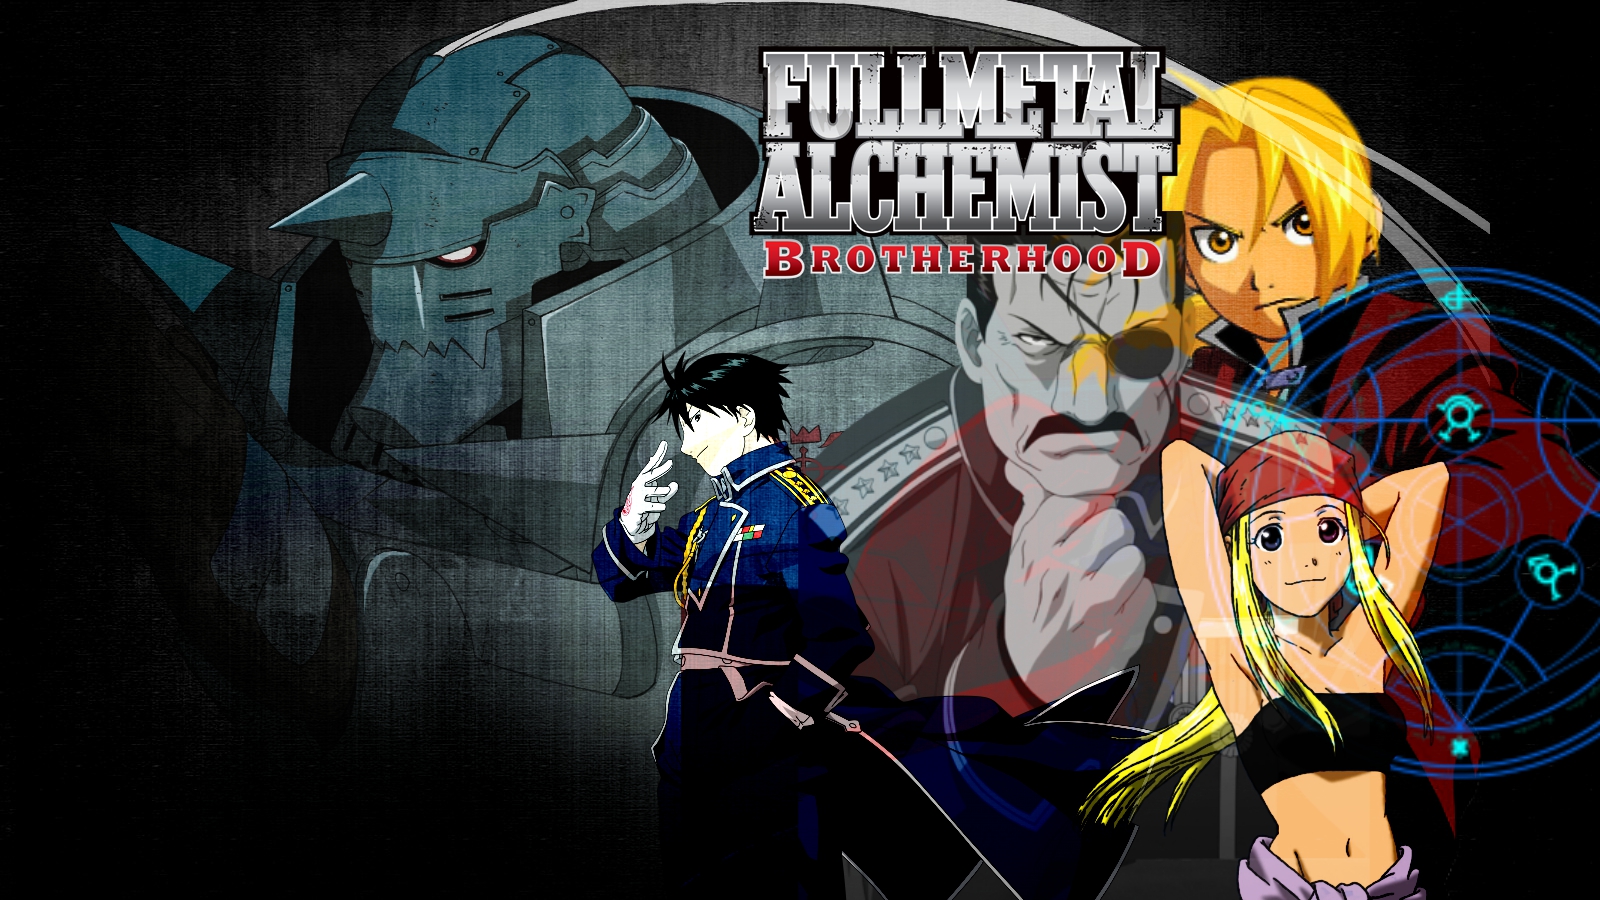 Wallpaper.wiki HD Fullmetal Alchemist Brotherhood Pictures PIC